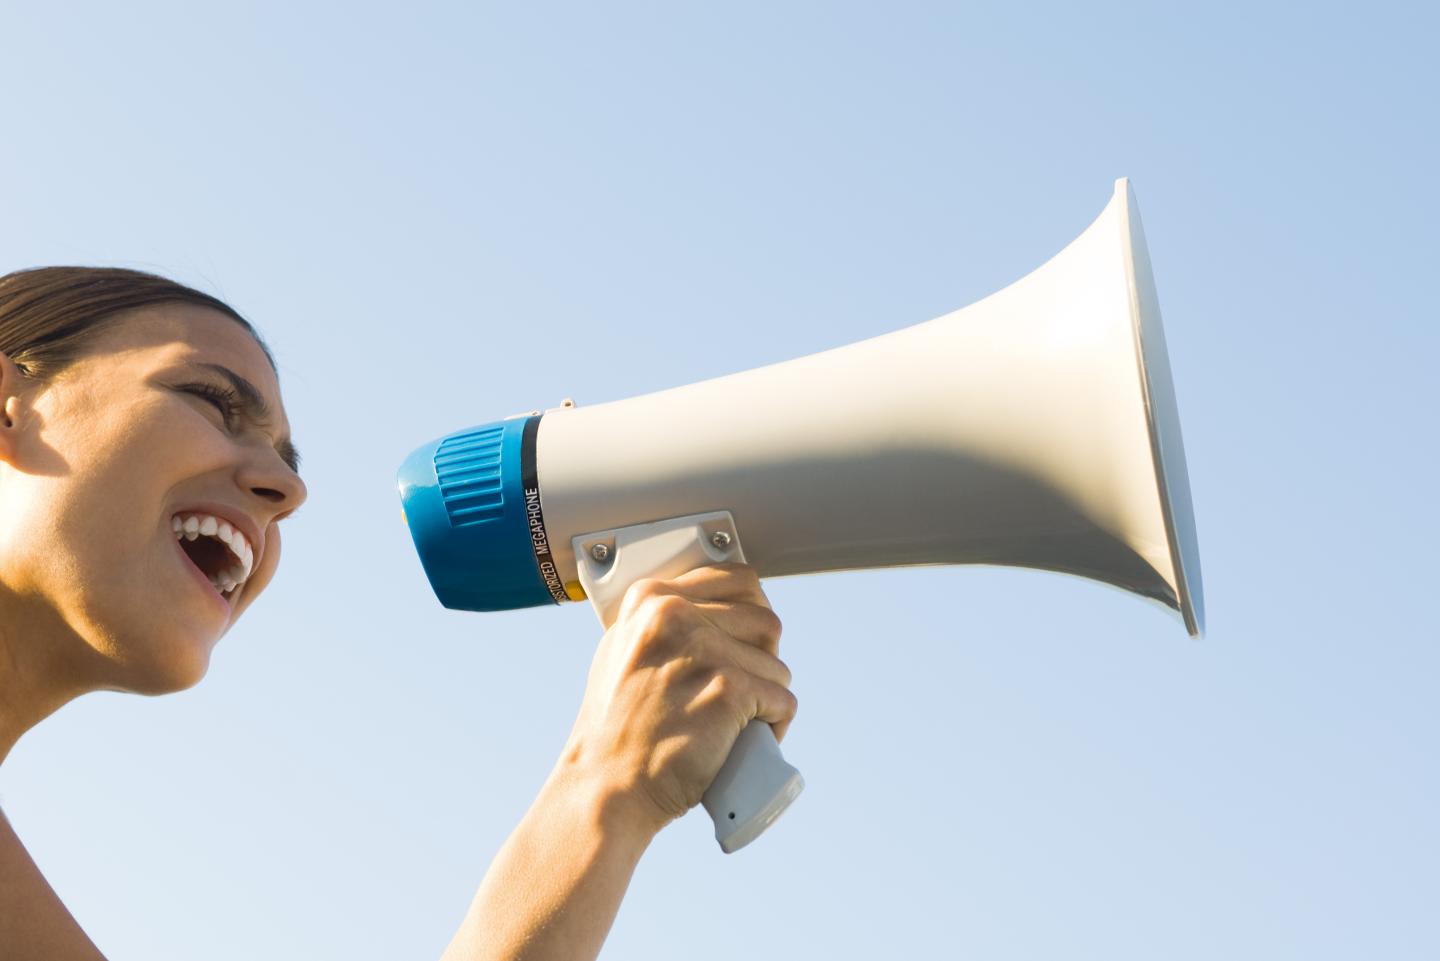 An activist shouting into a megaphone